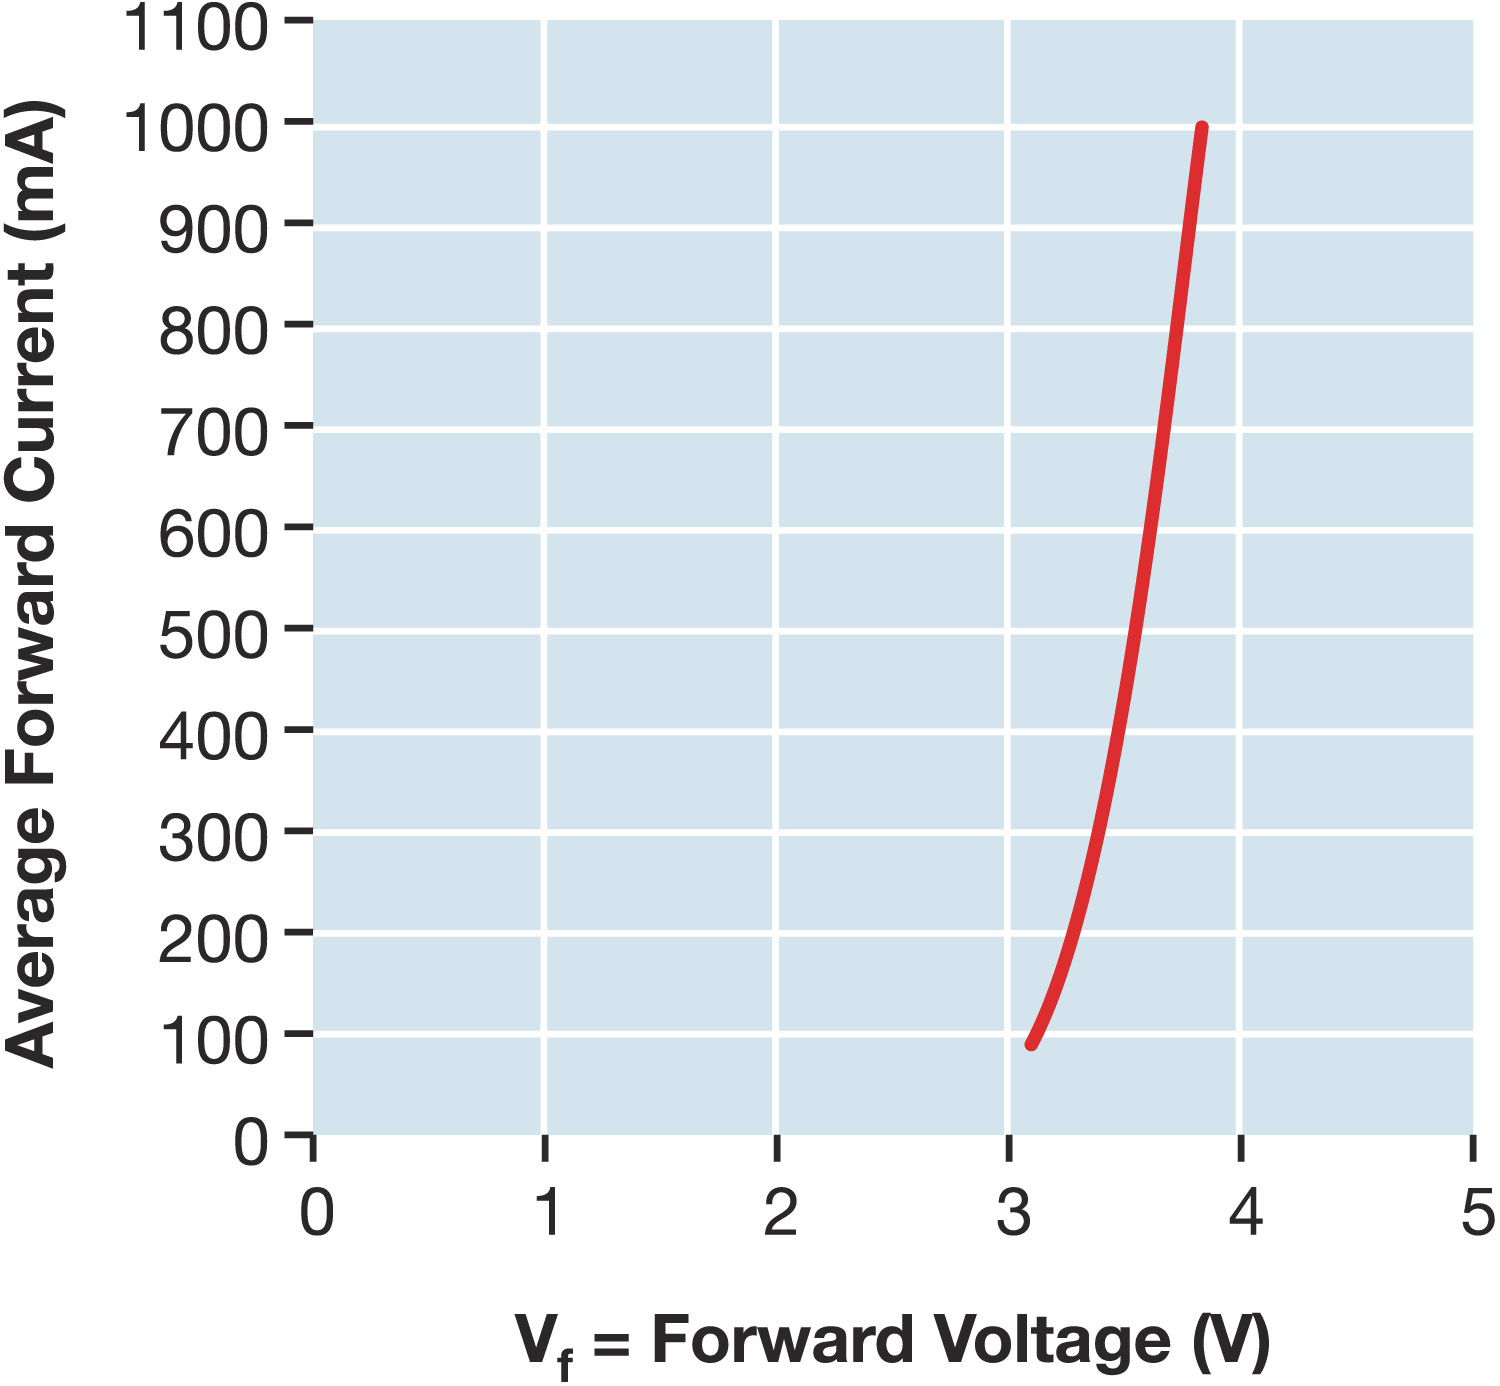 led电光特性曲线图图片